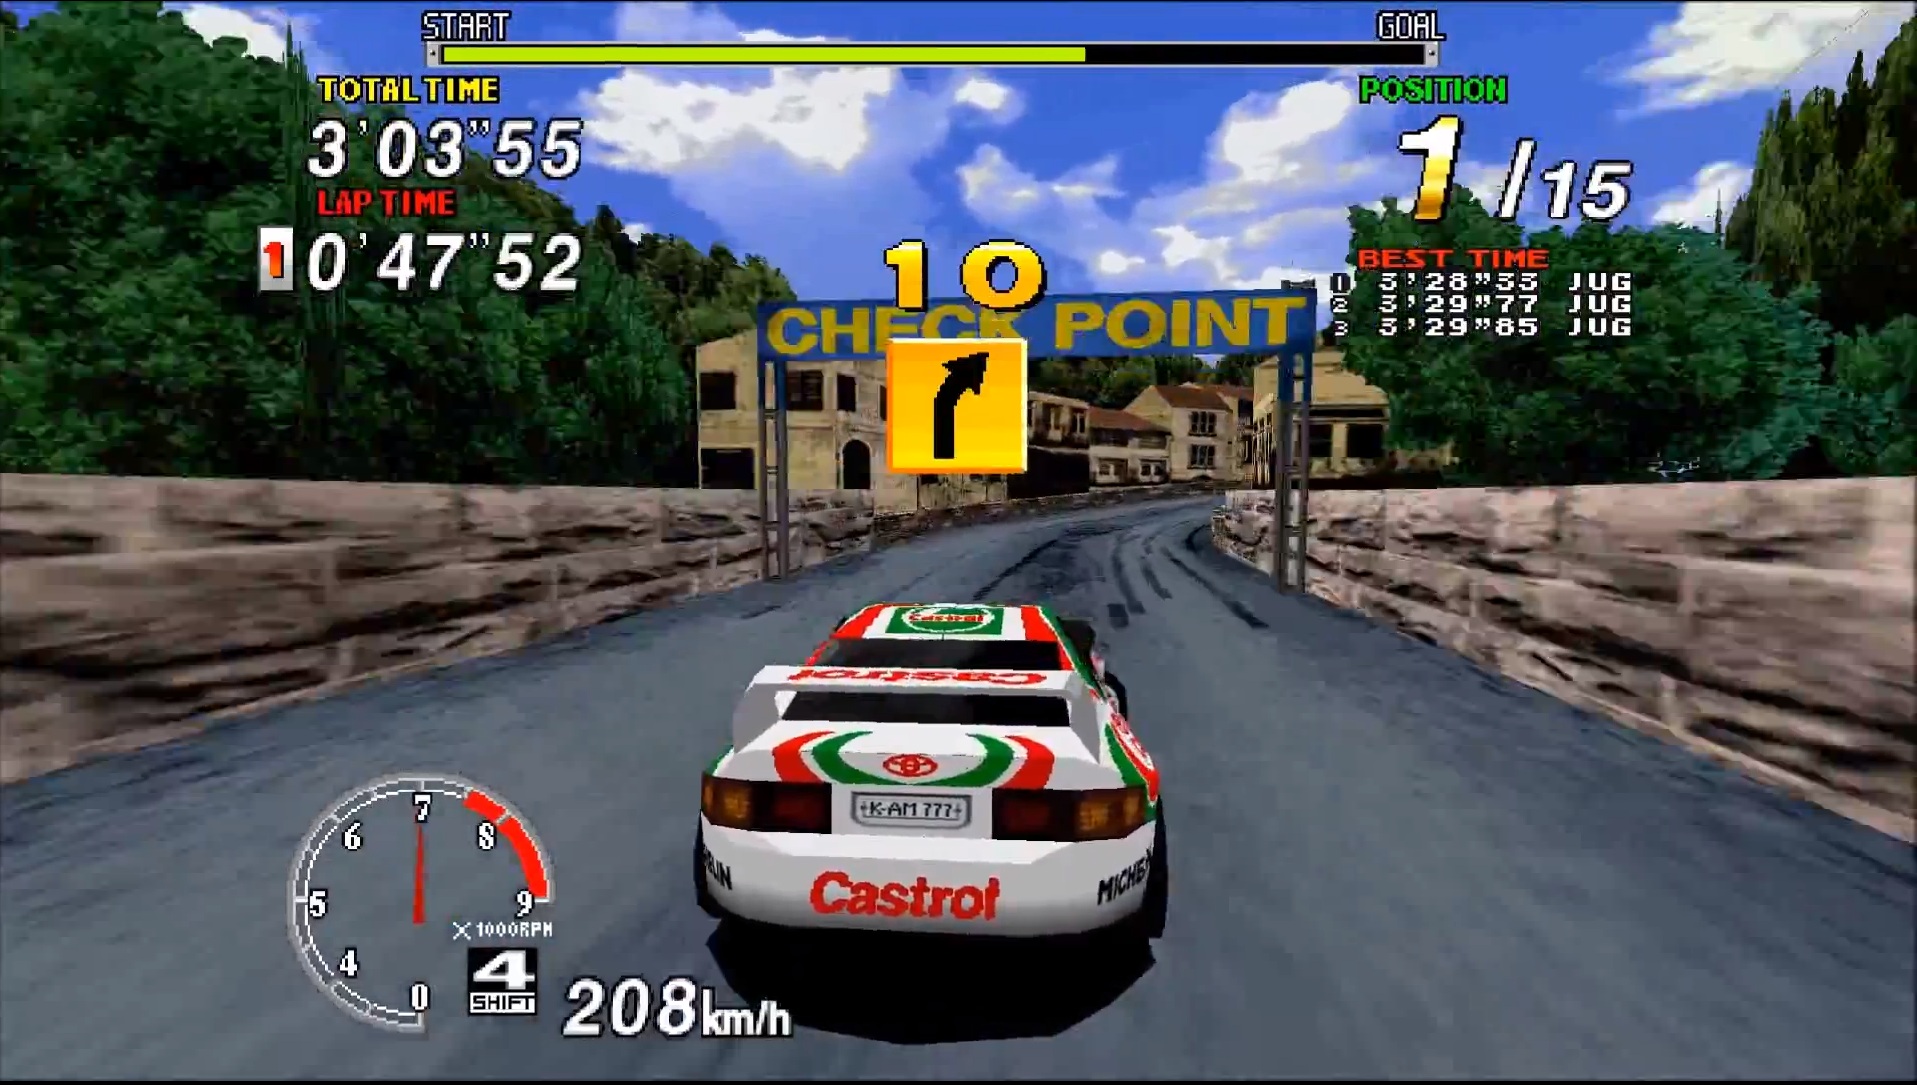 Sega Rally HD wallpapers, Desktop wallpaper - most viewed